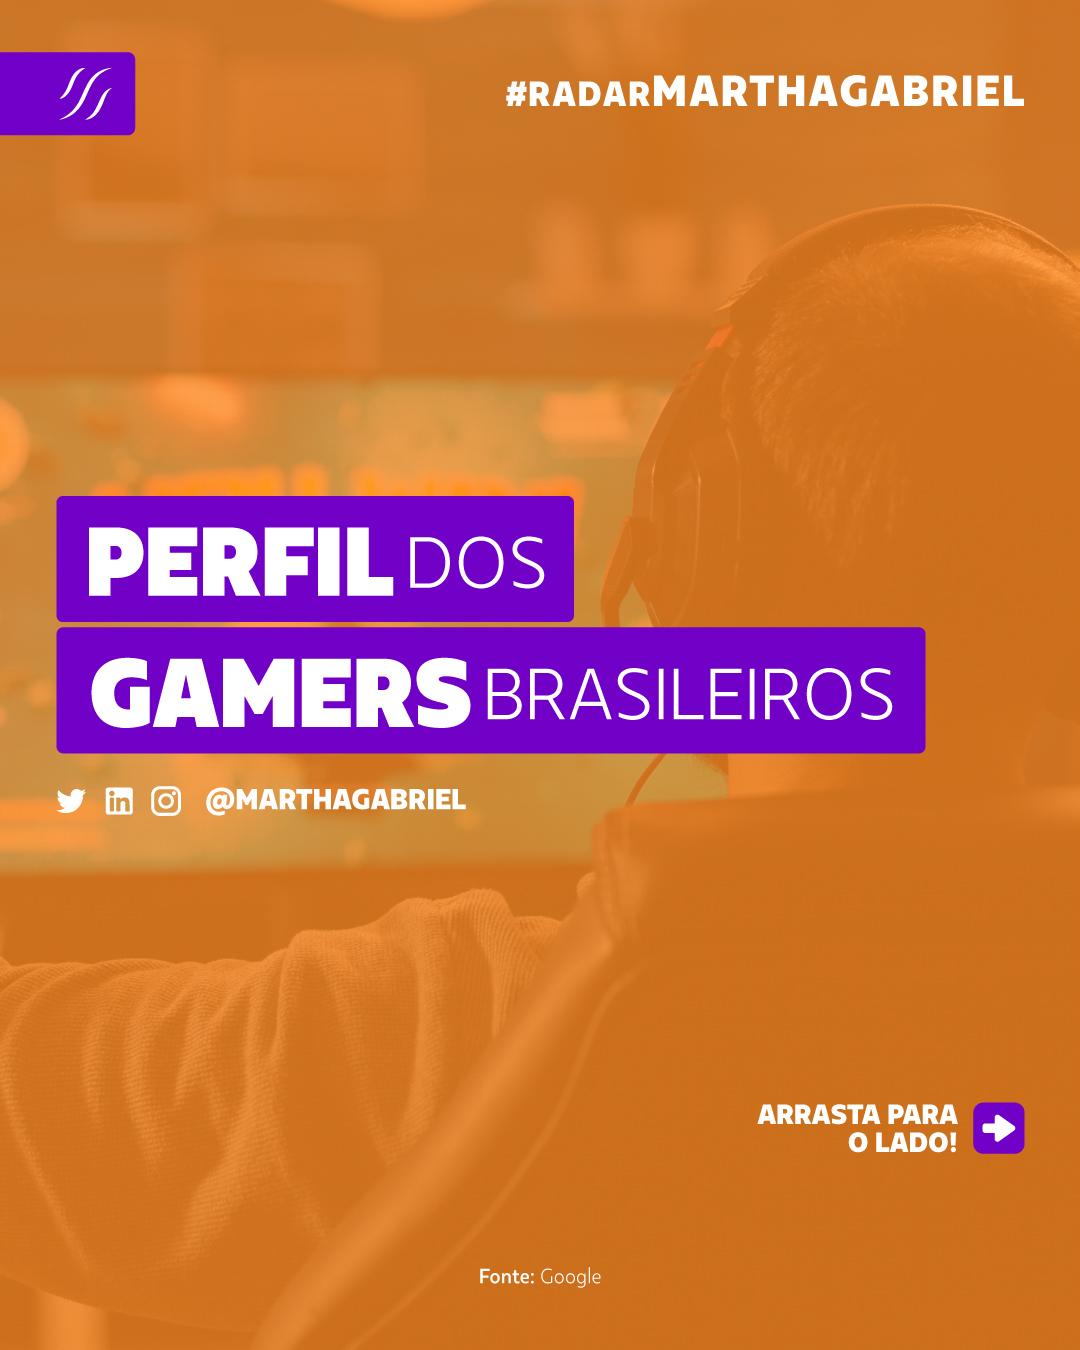 Perfil dos gamers brasileiros